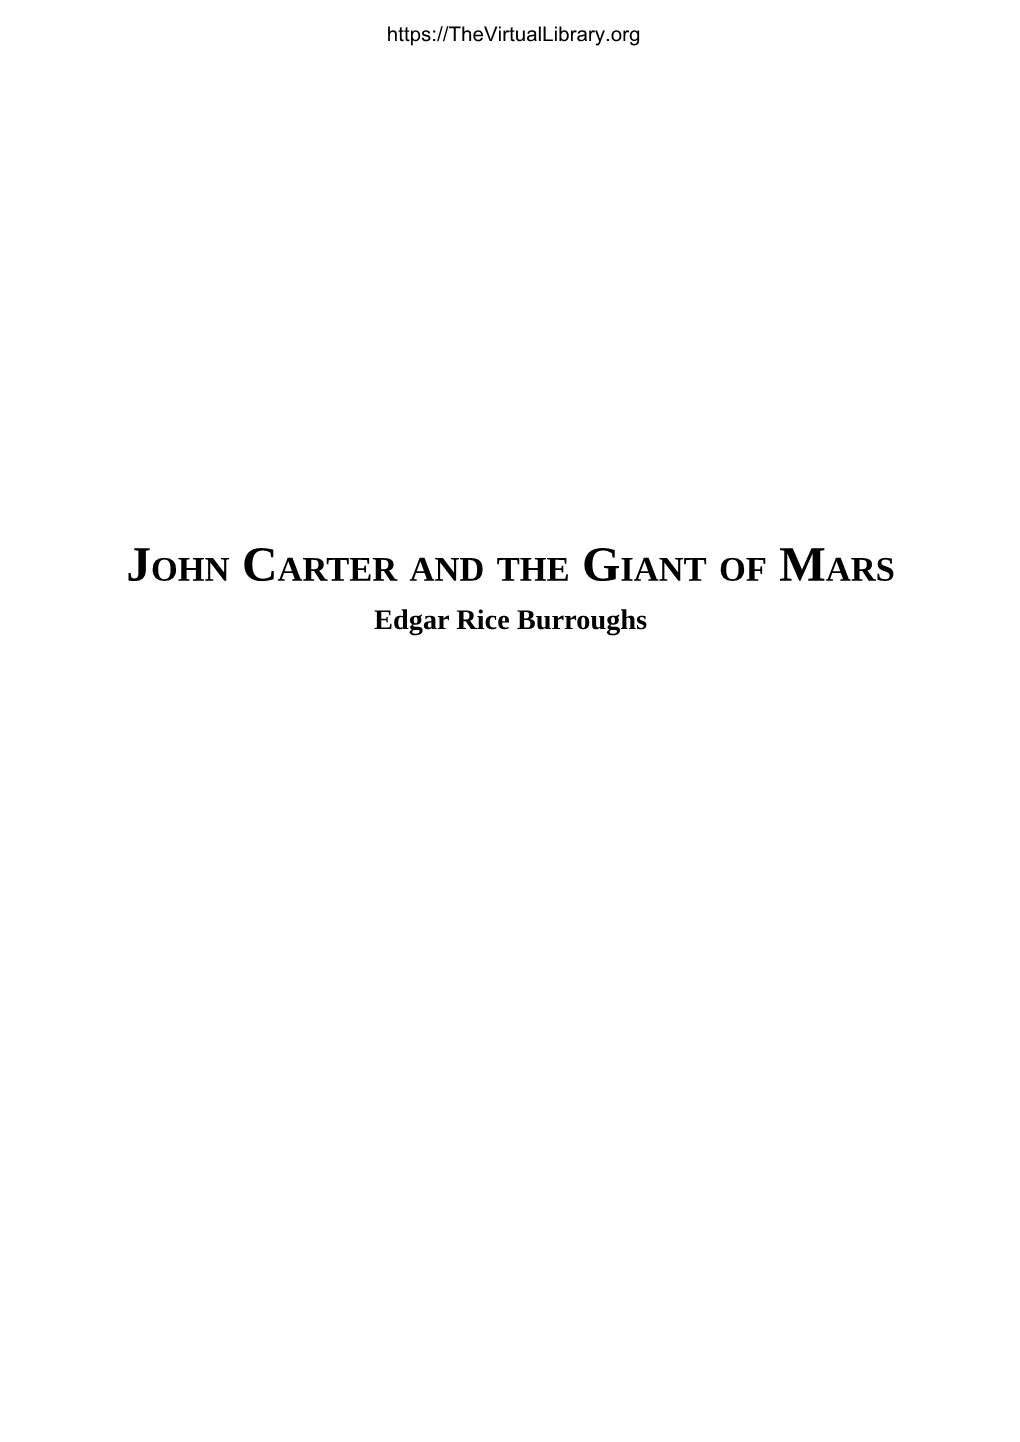 JOHN CARTER and the GIANT of MARS Edgar Rice Burroughs